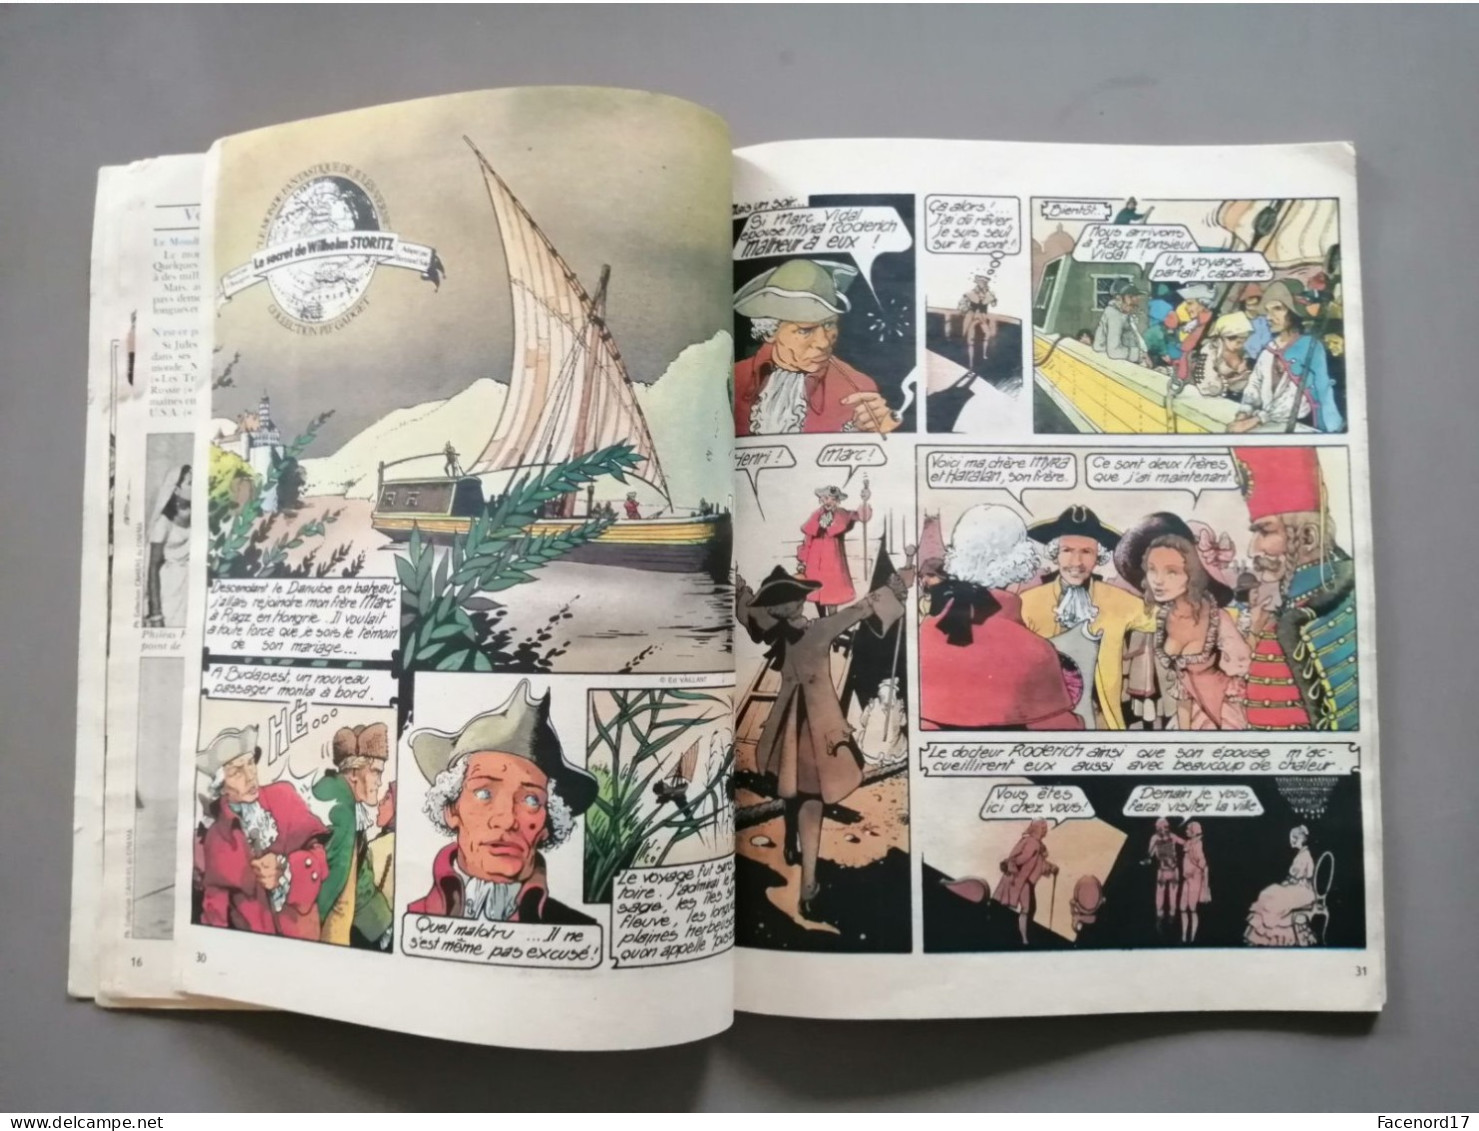 Pif Parade Hors série Jules Verne en bandes dessinées juillet 1979